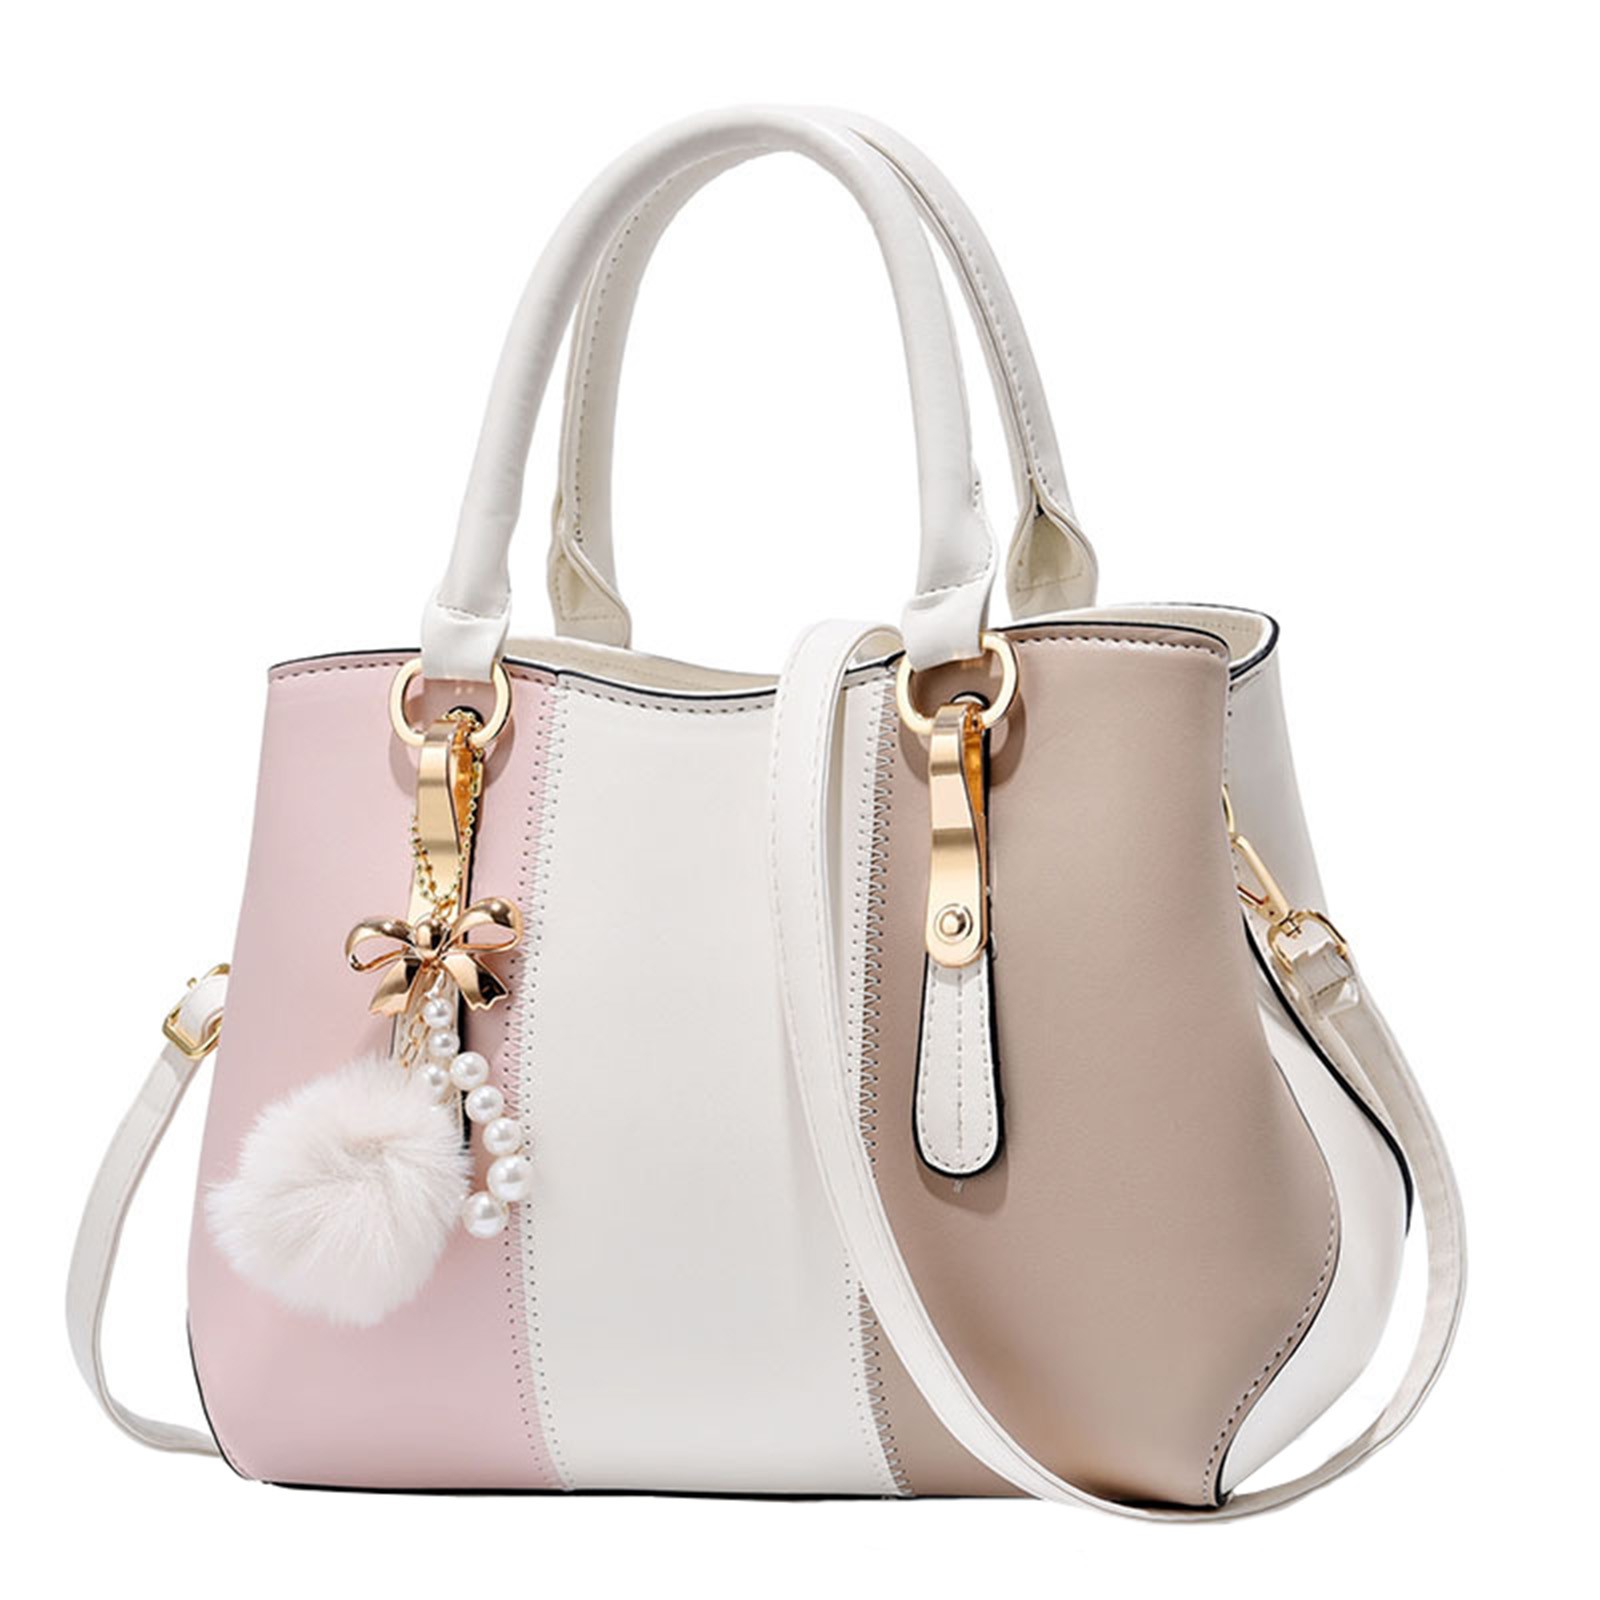 FHKOEGHS Elegant Ladies Handbags Fashion Shoulder Bags Purses and ...